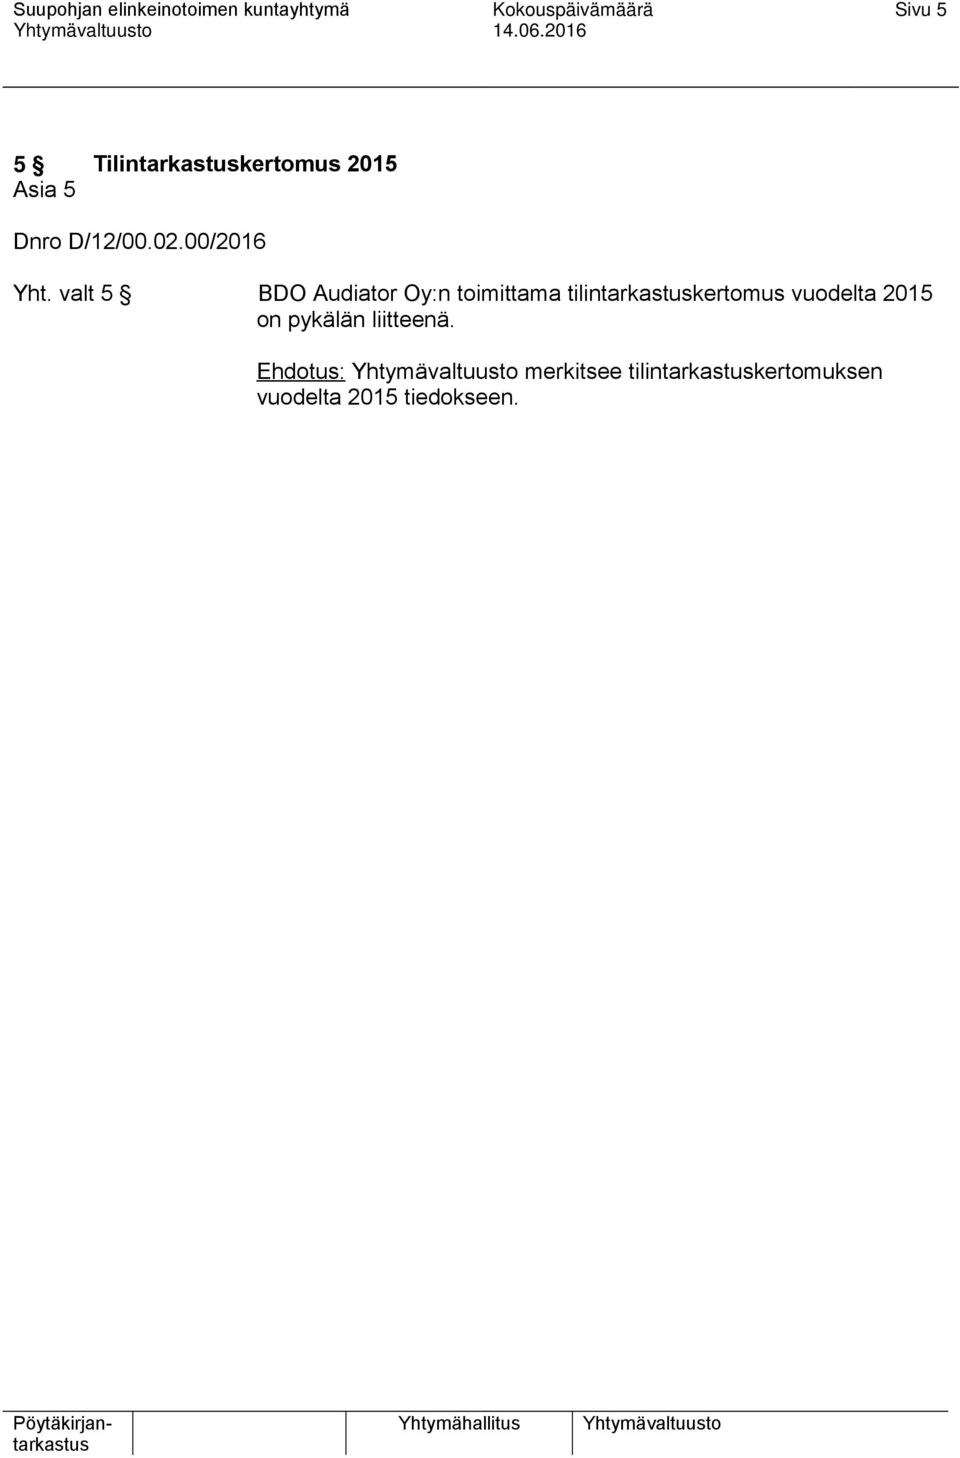 valt 5 BDO Audiator Oy:n toimittama tilintarkastuskertomus